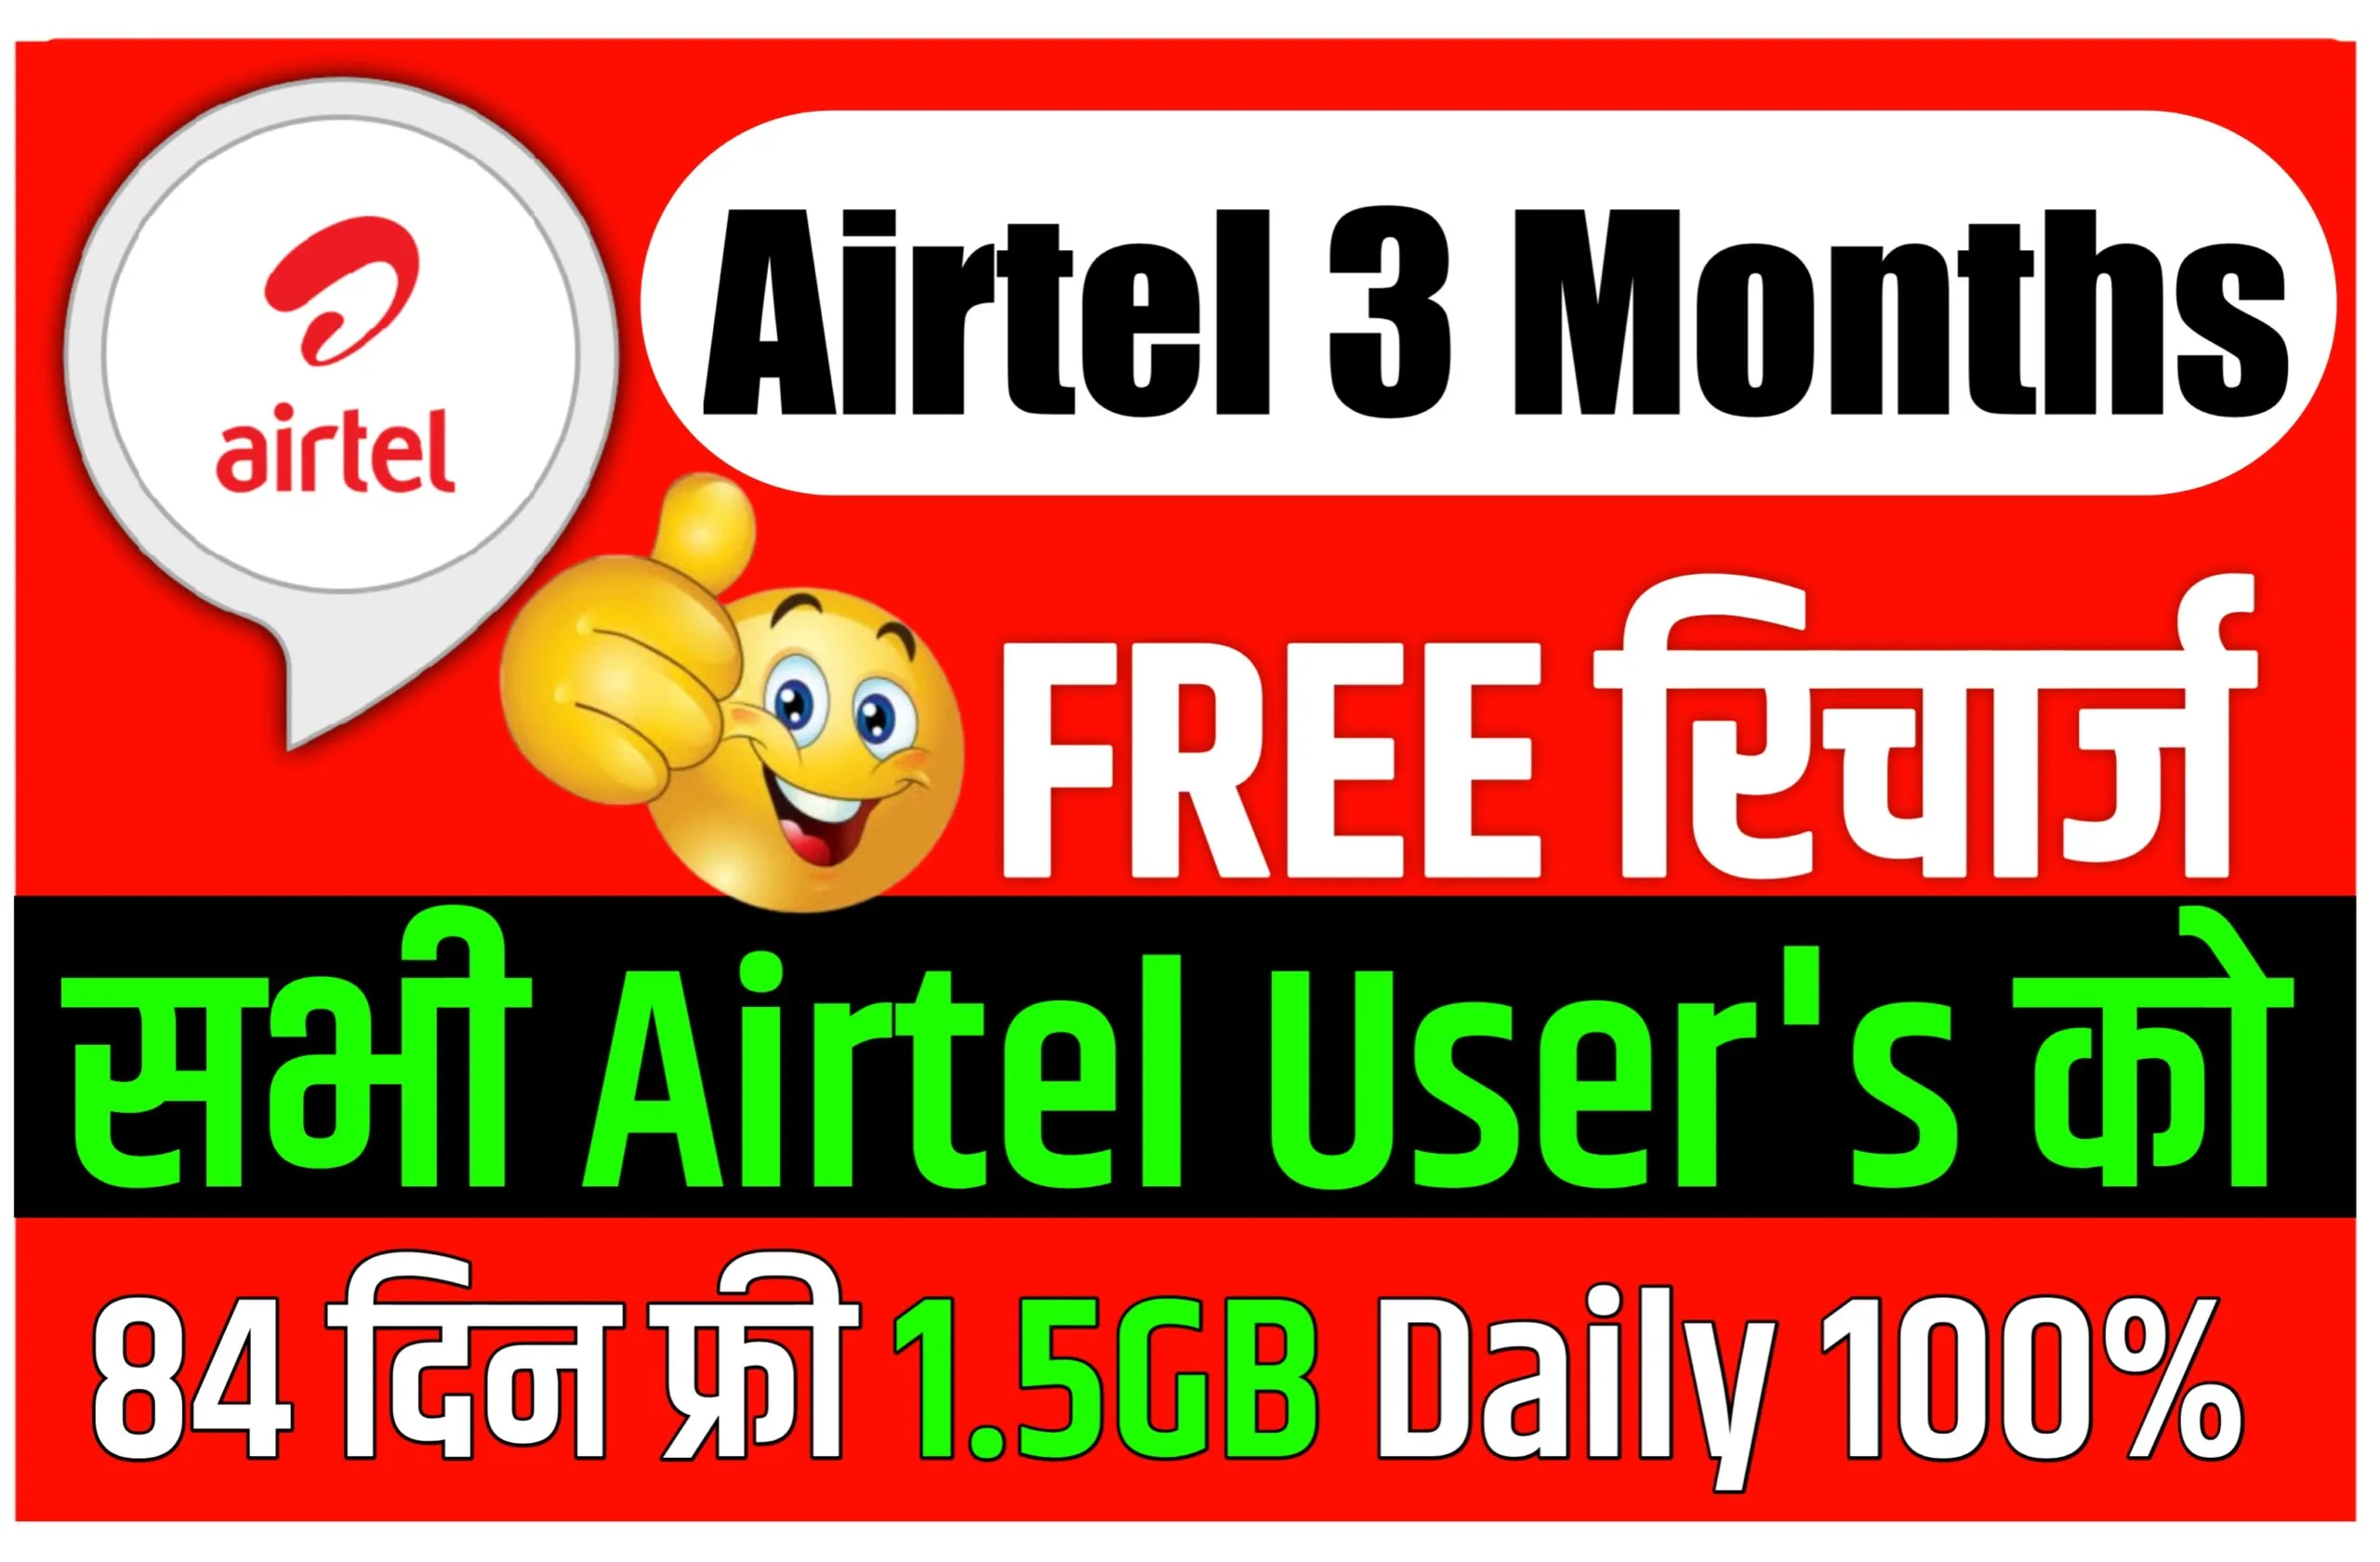 Airtel Free Offer